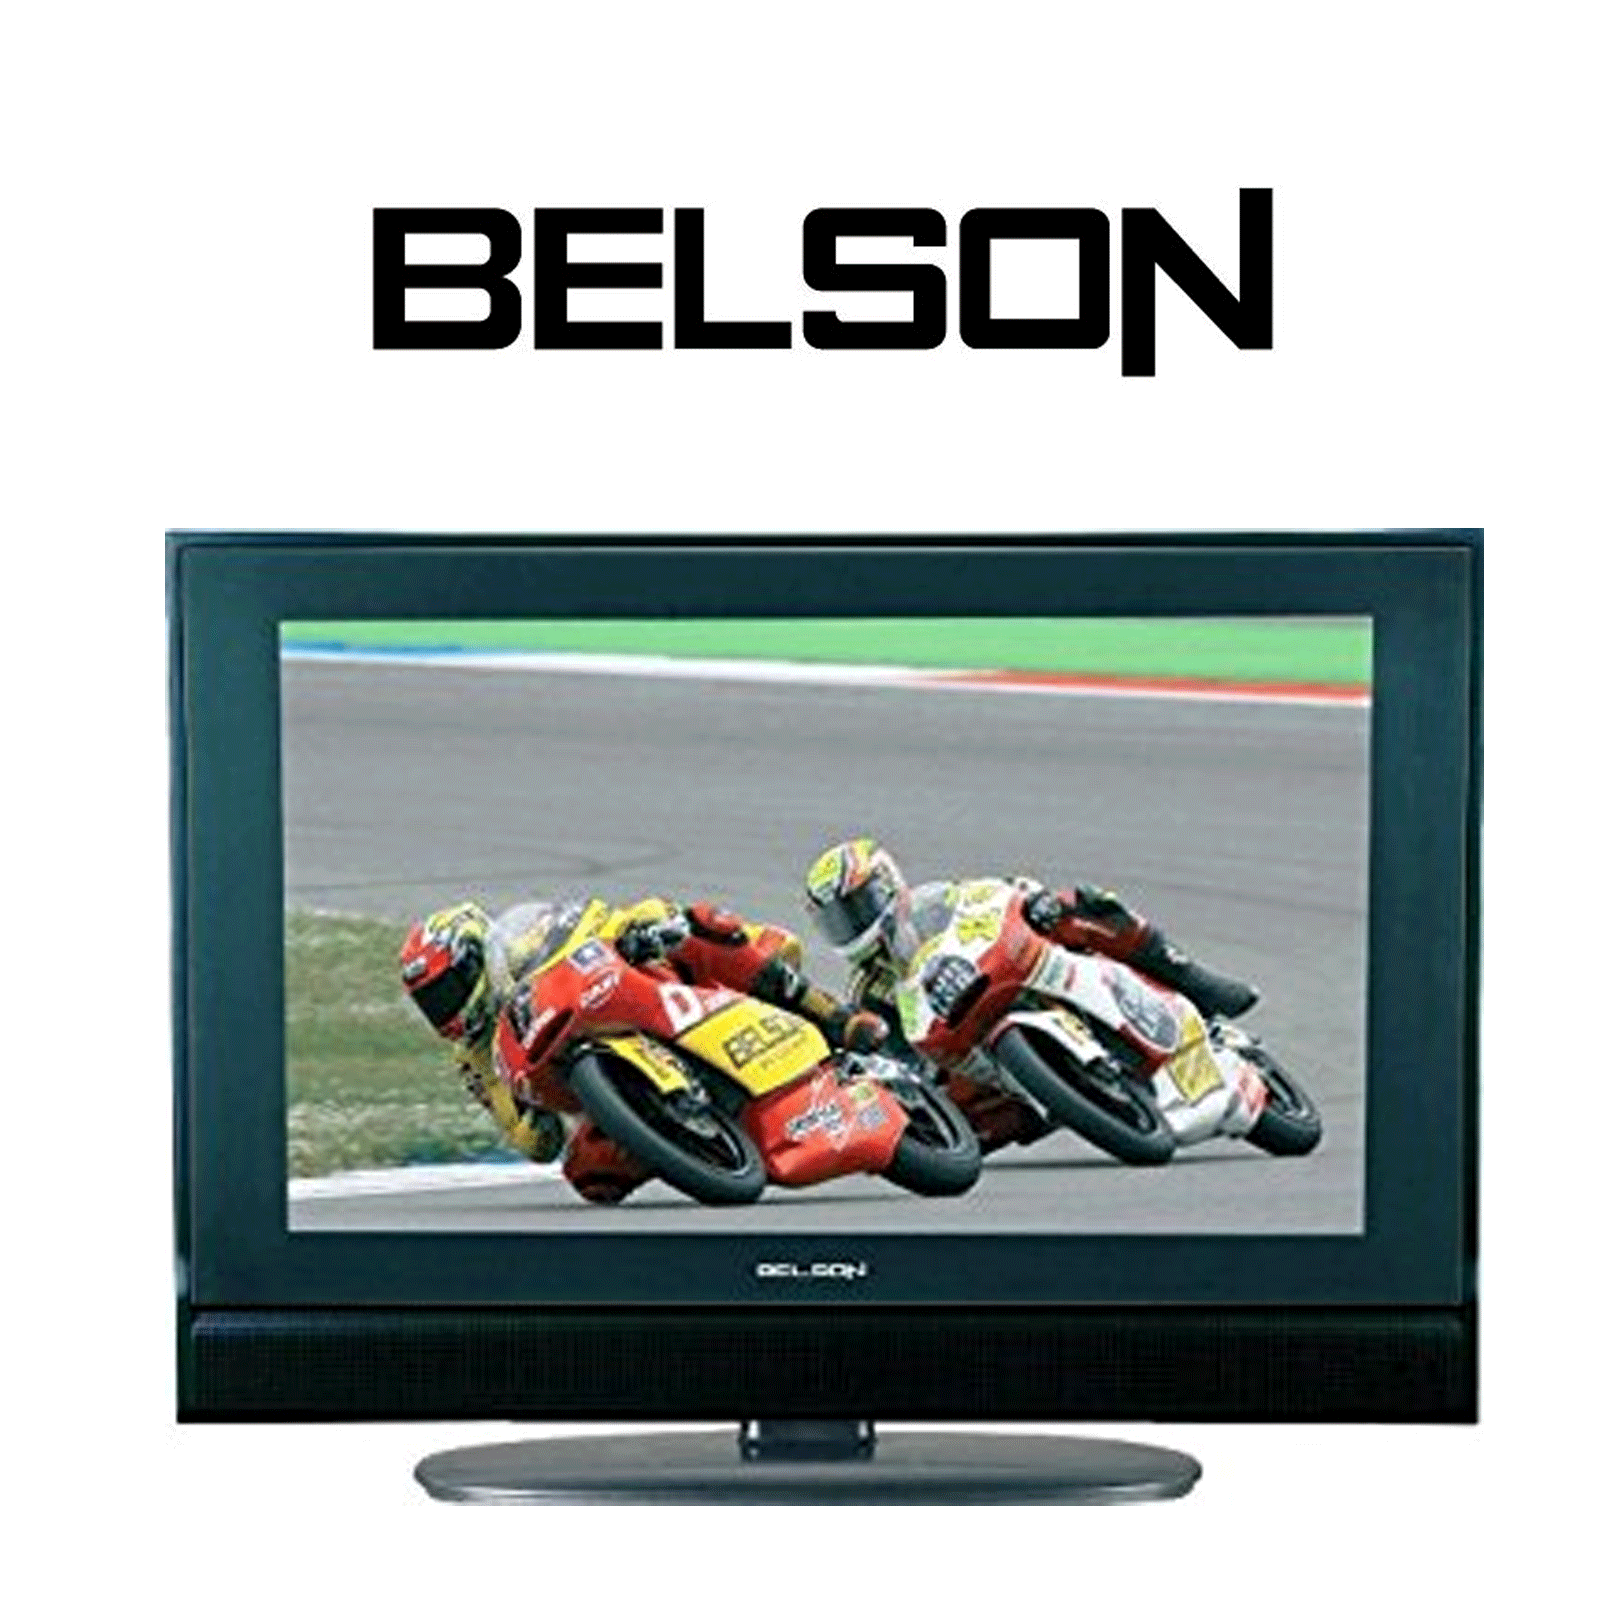 Belson TV service manuals and schematics